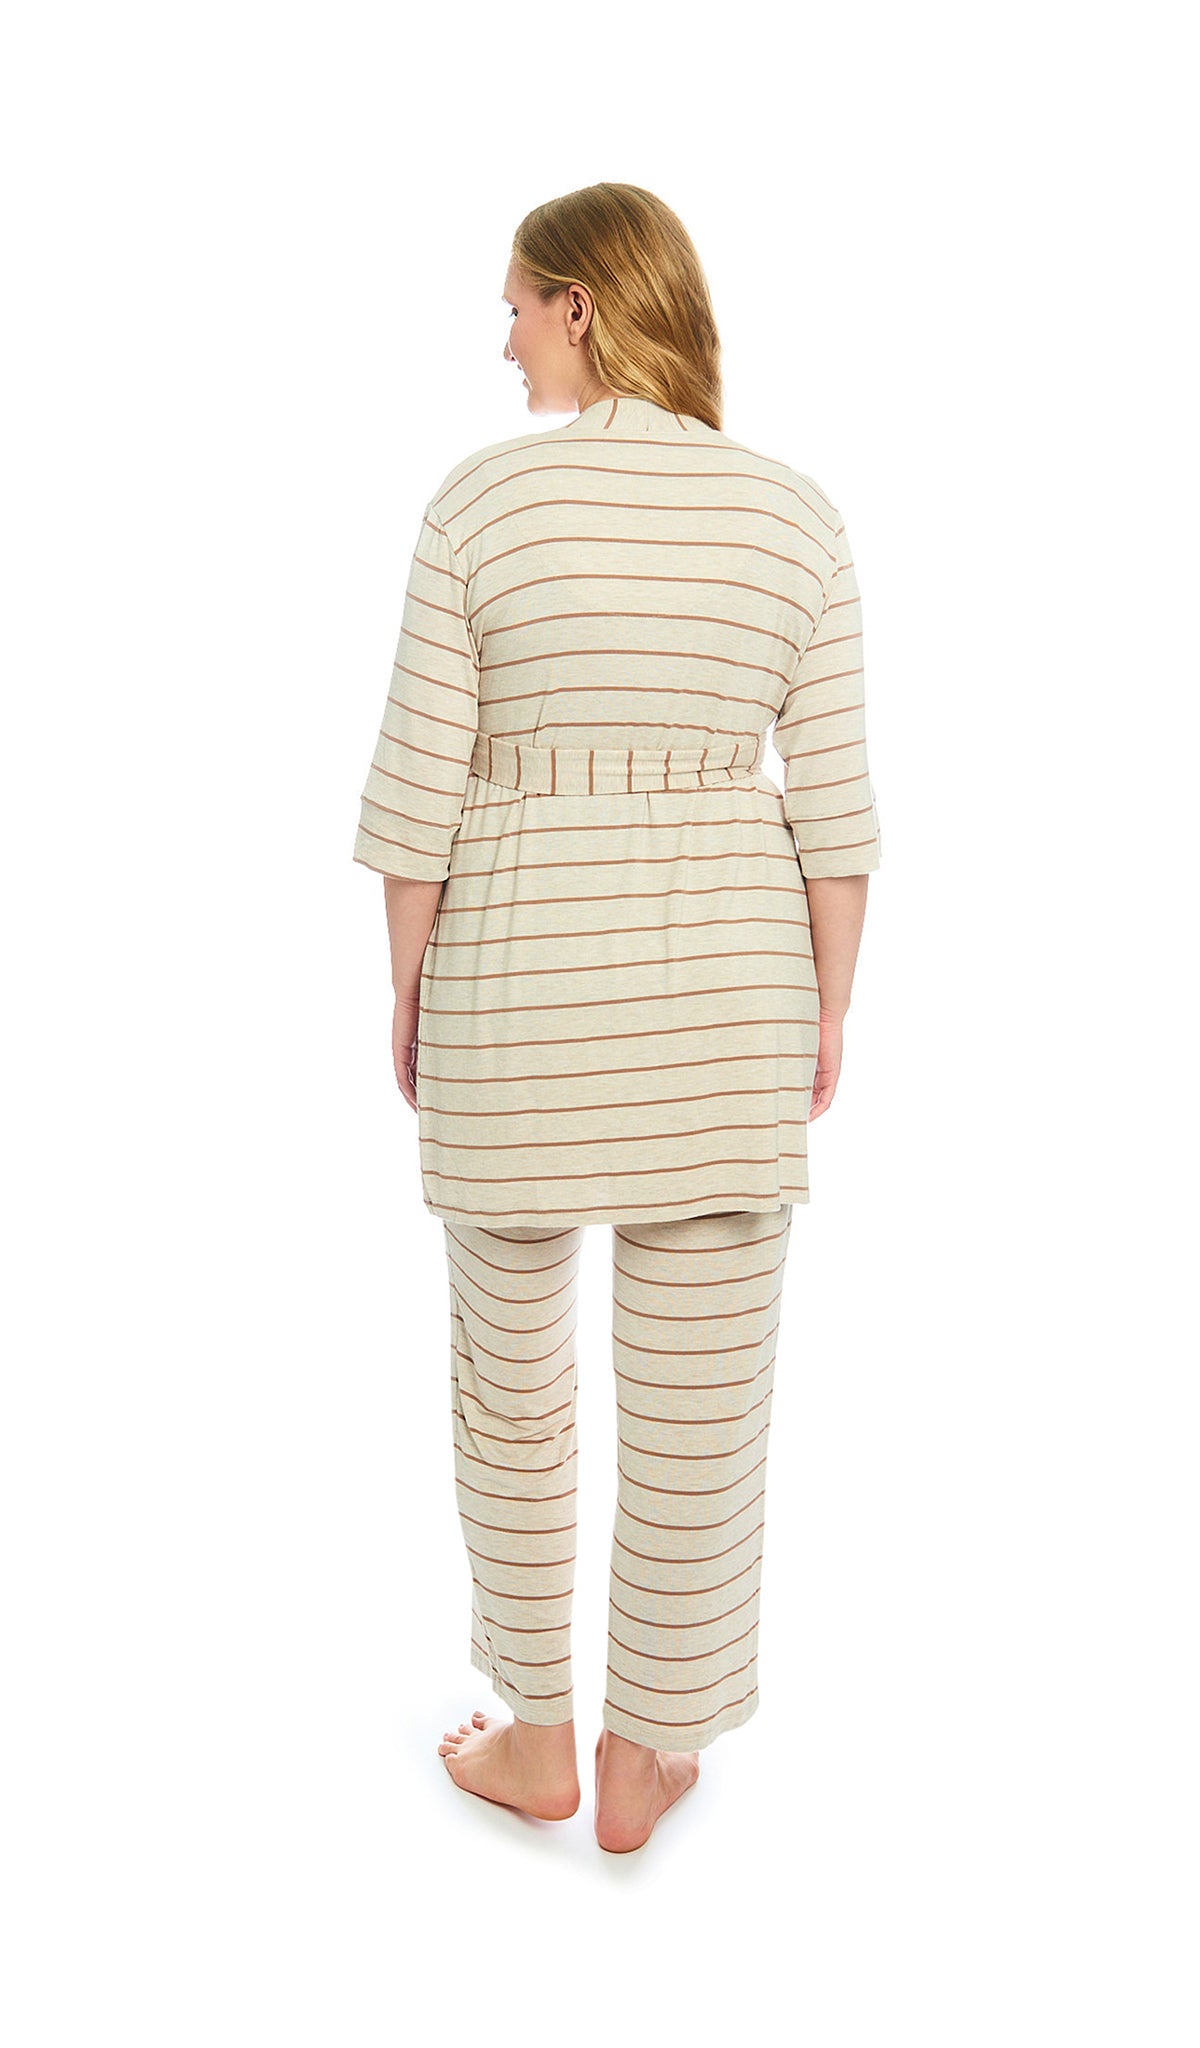 Mocha Stripe Analise 3-Piece Set, back shot of woman wearing robe and pant.